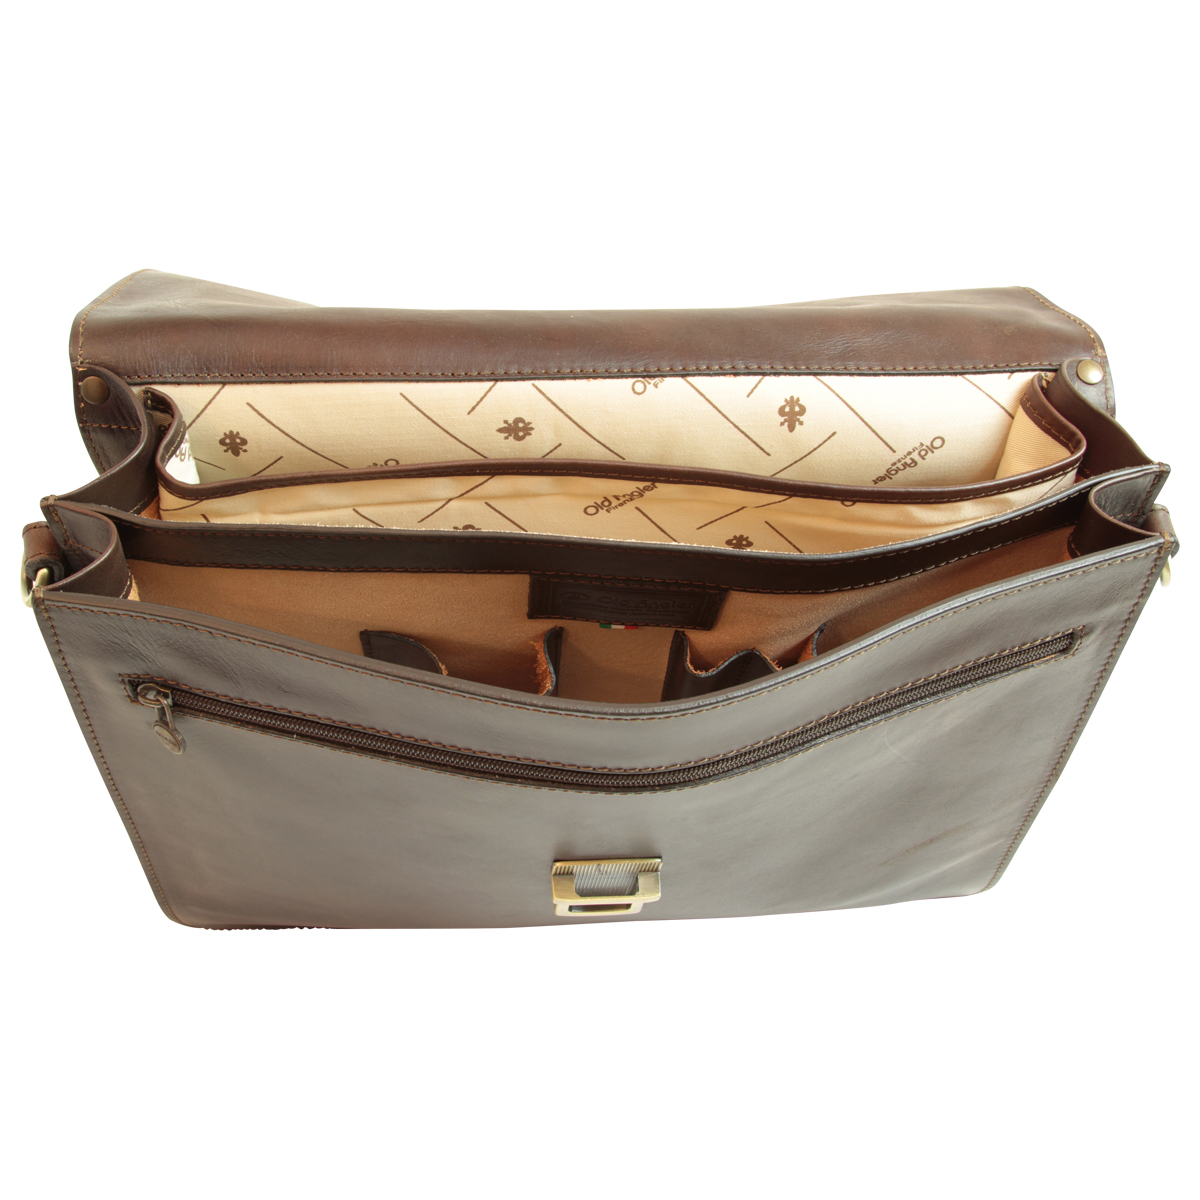 Leather Laptop Briefcase - Dark Brown | 052889TM UK | Old Angler Firenze